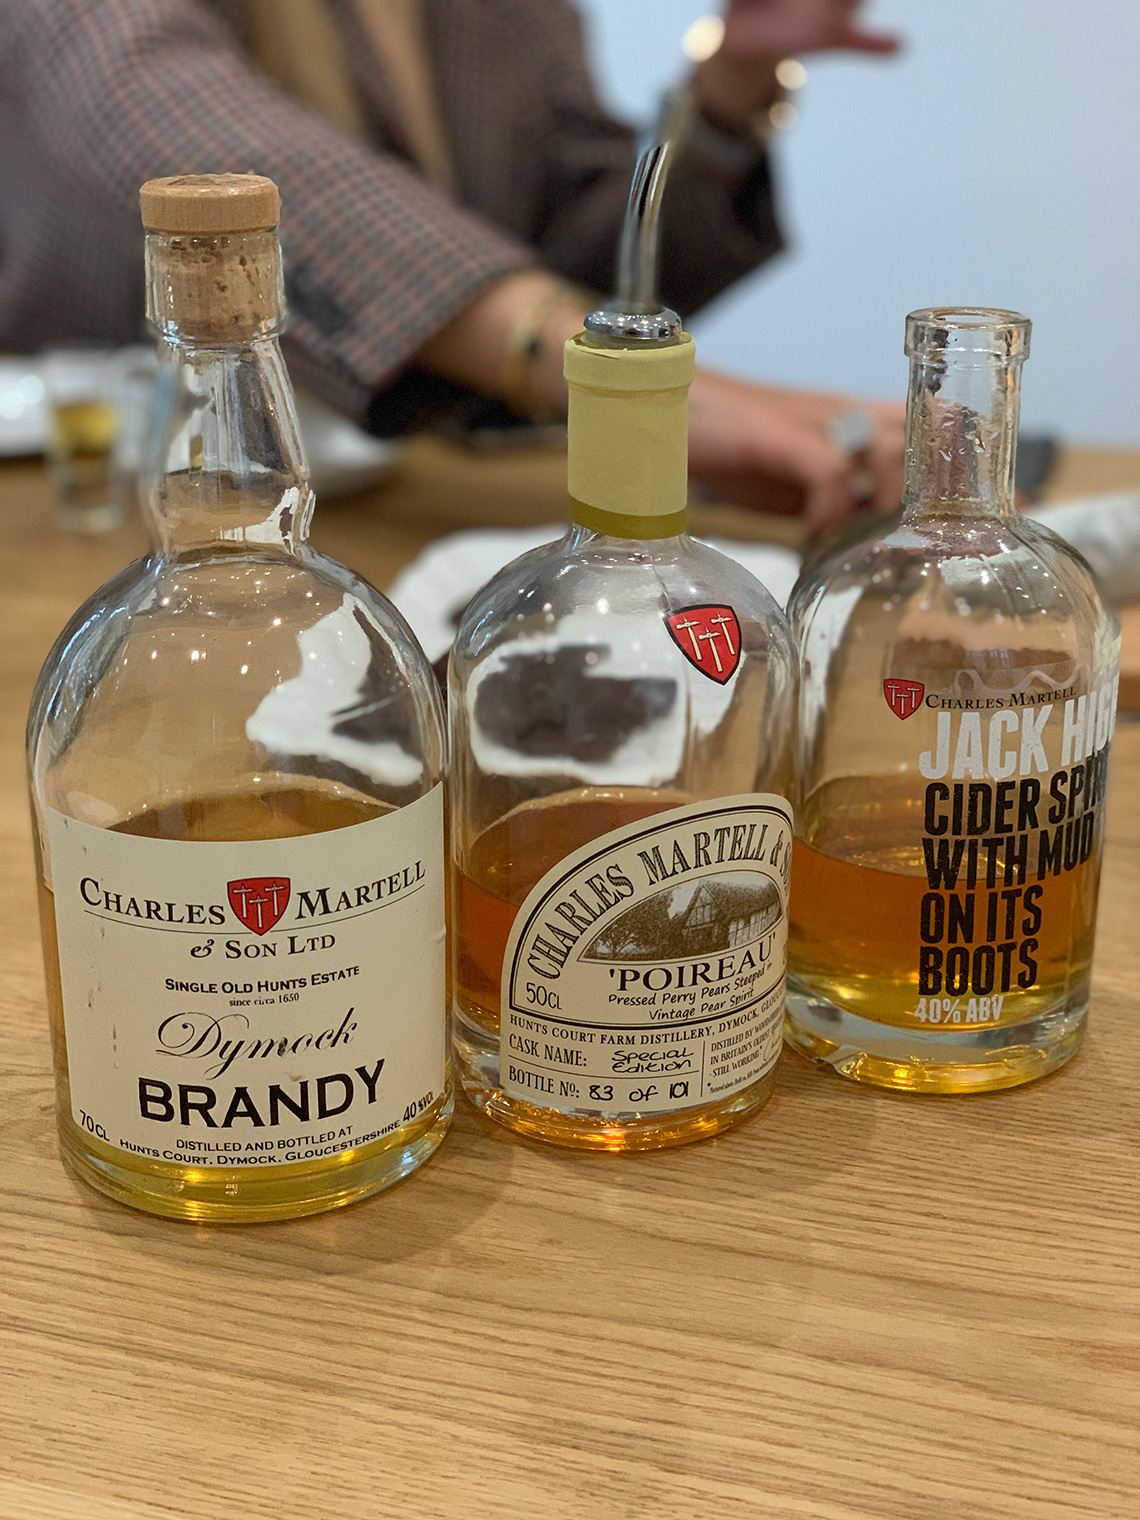 Charles Martell's brandies